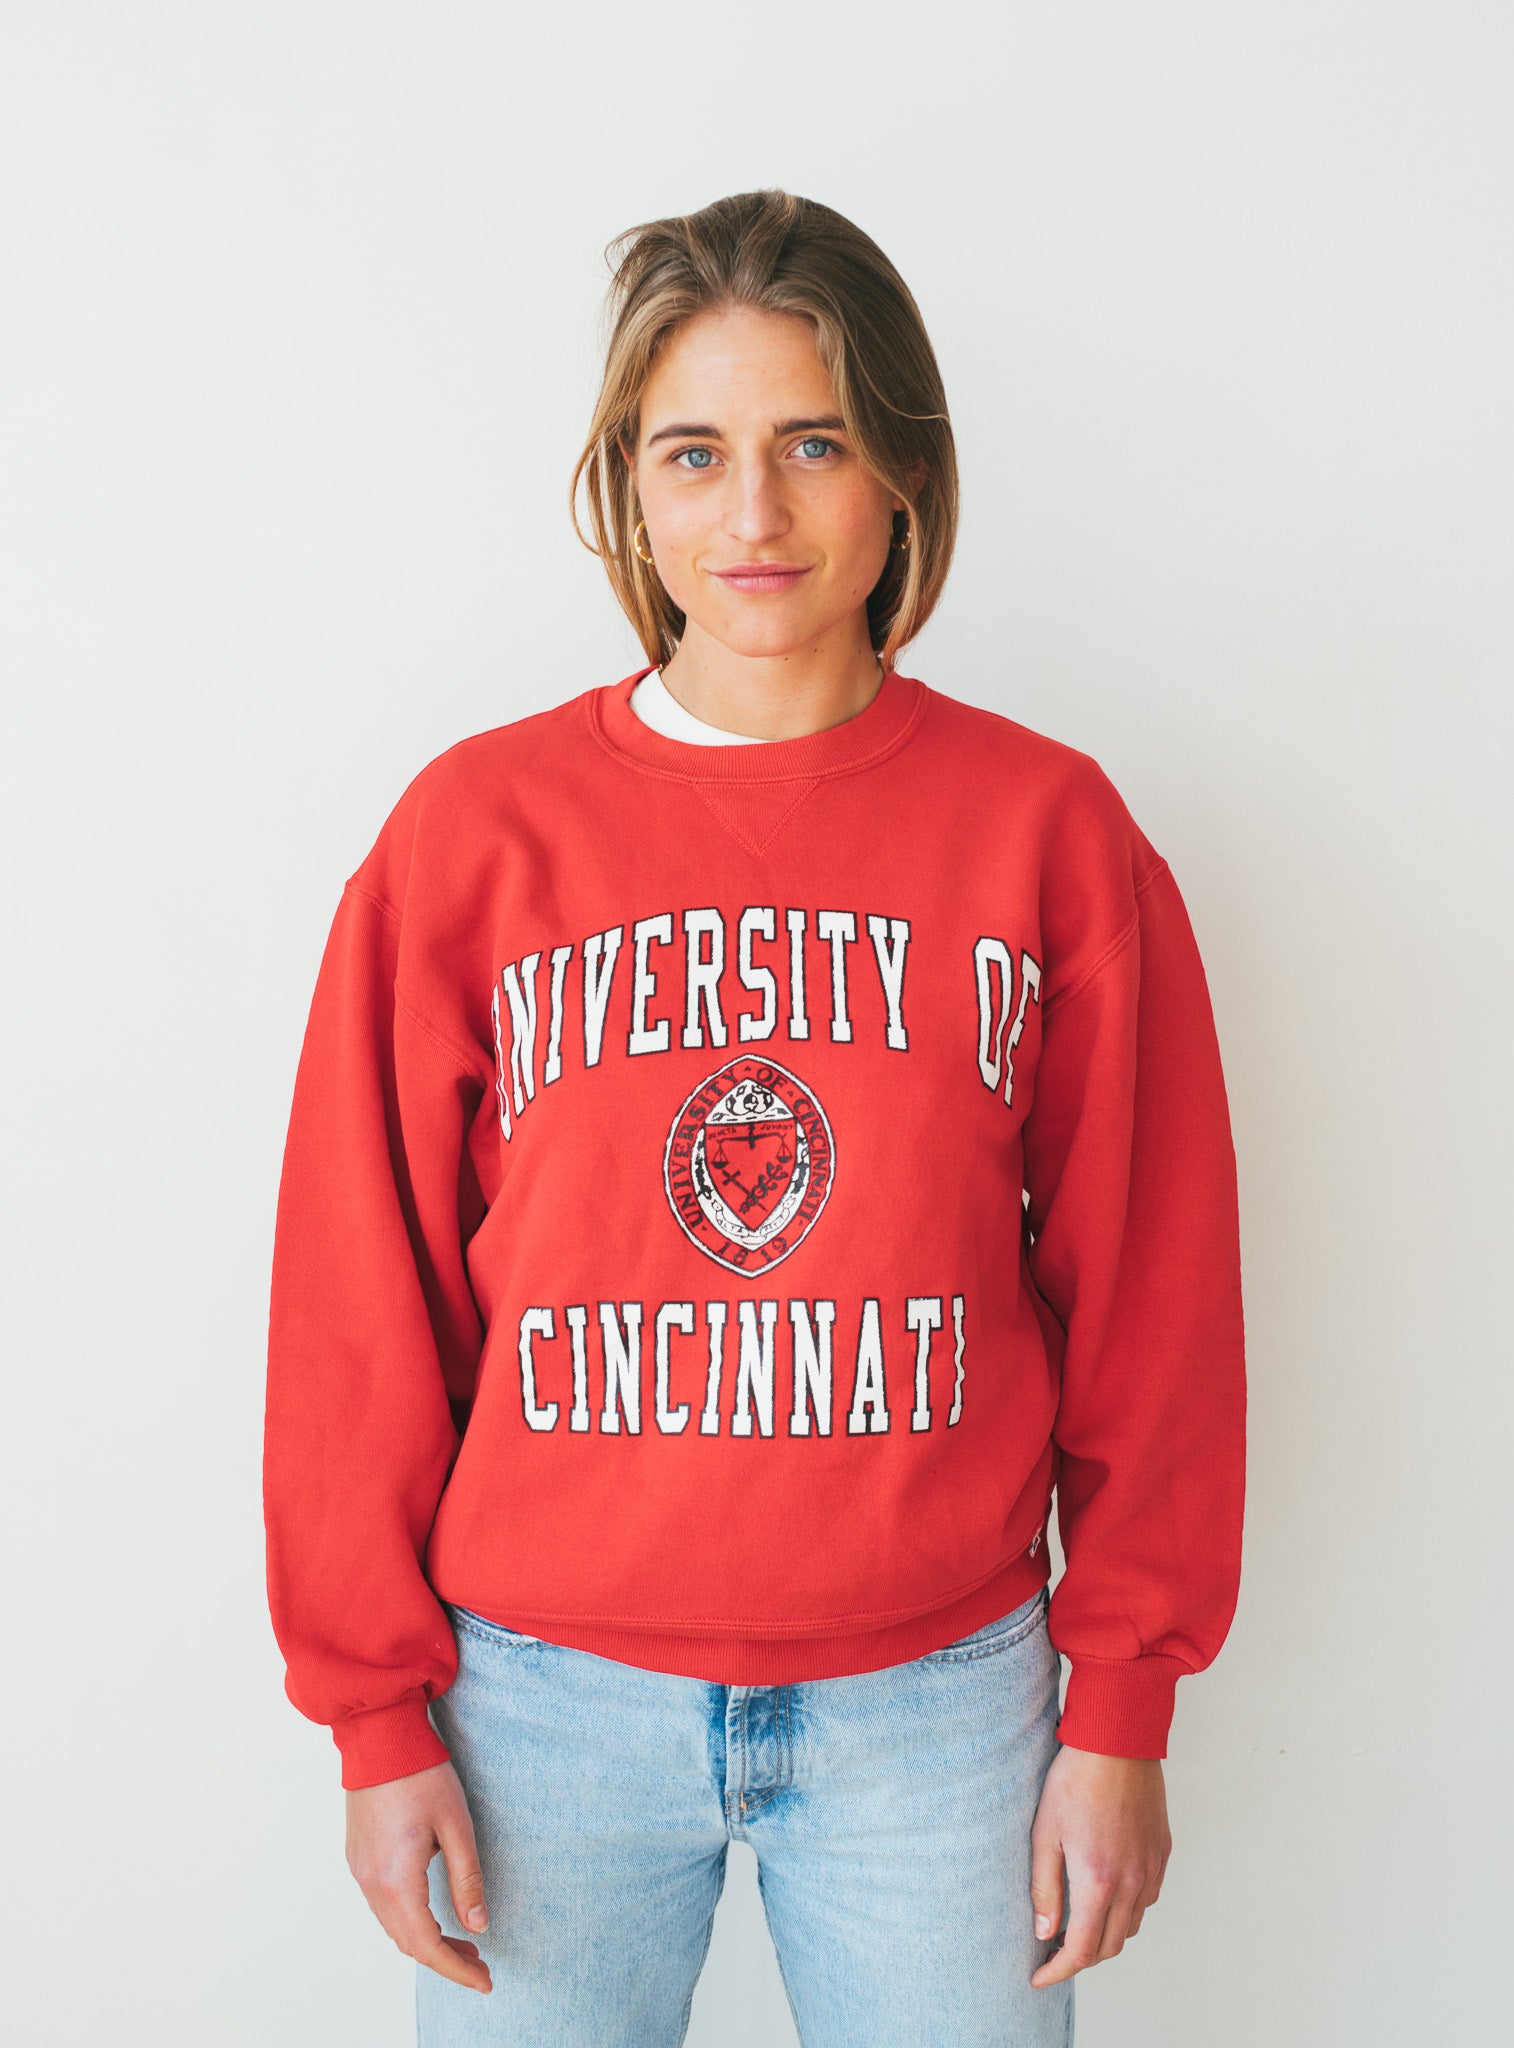 University of Cincinnati - Sweatshirt